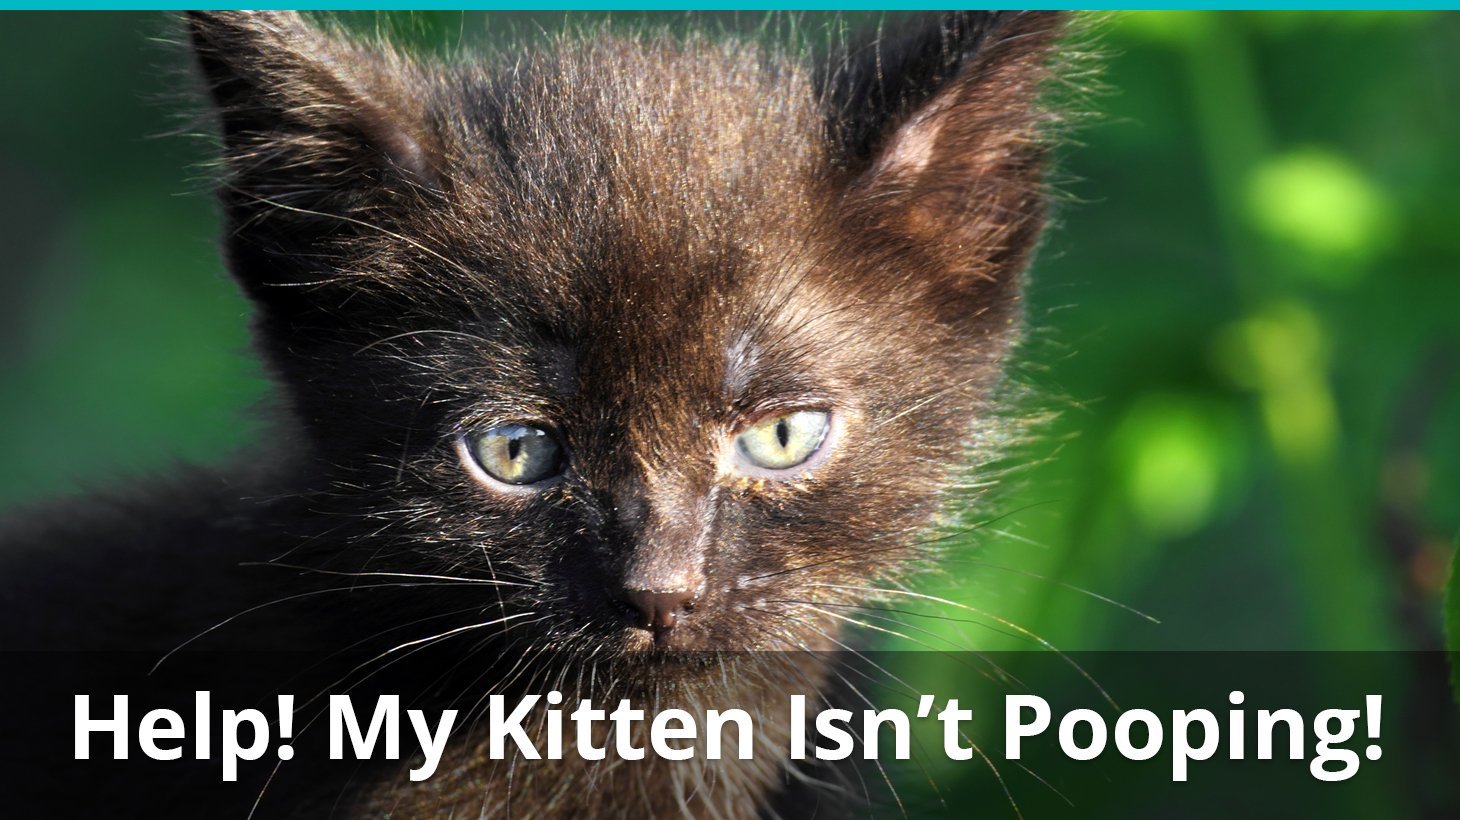 why isnt kitten cat pooping